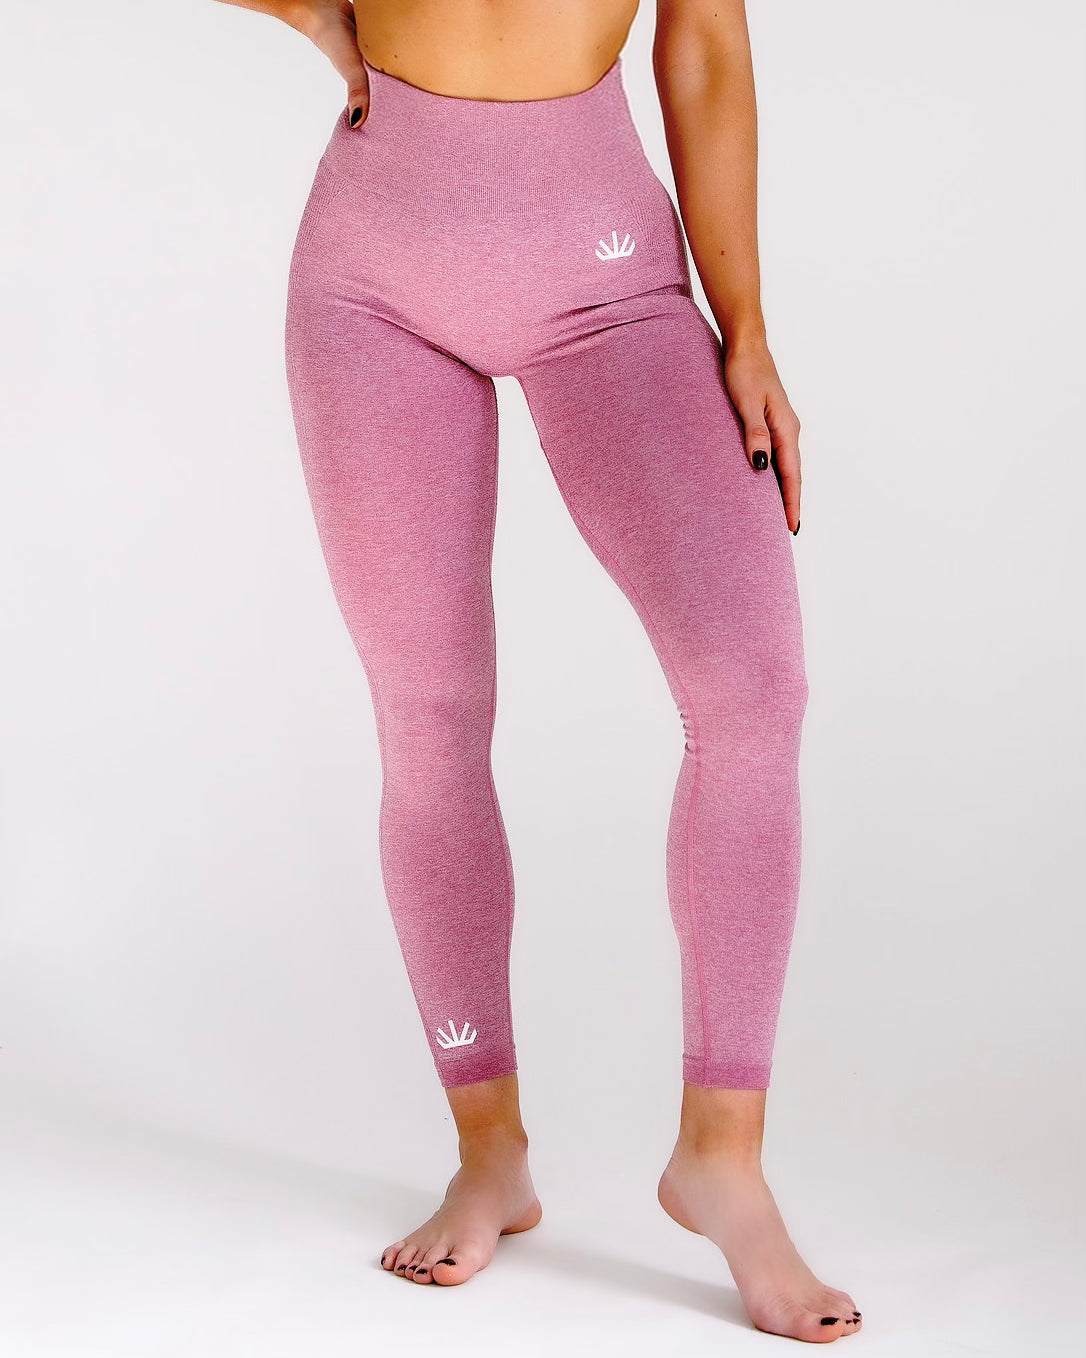 Scrunch Butt Legging for Gym, Yoga or Loungewear - Carnation Pink – Superspy